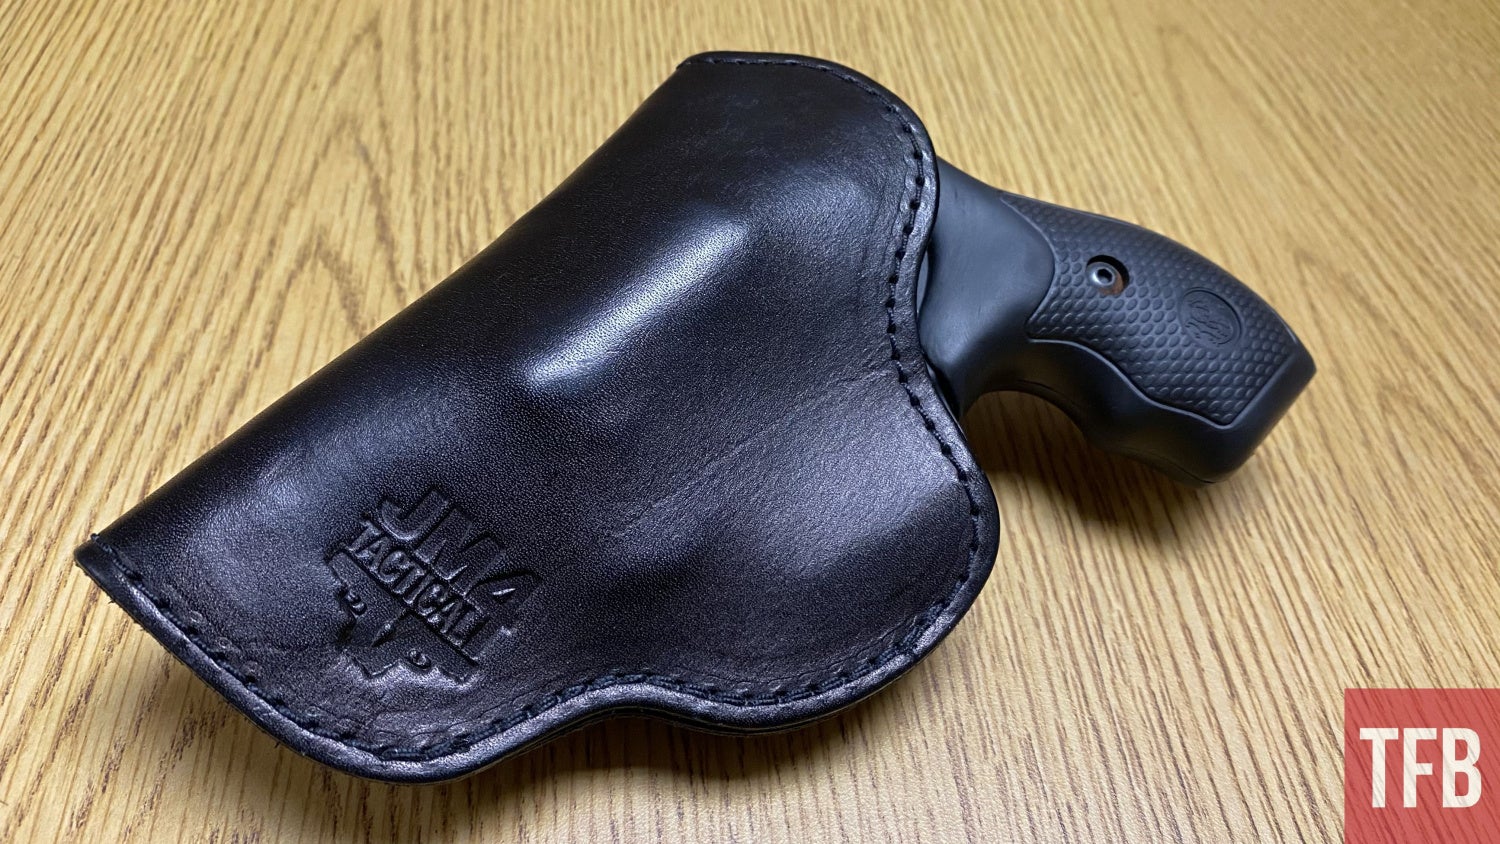 Concealed Carry Corner: Benefits of a Snub Nose Revolver